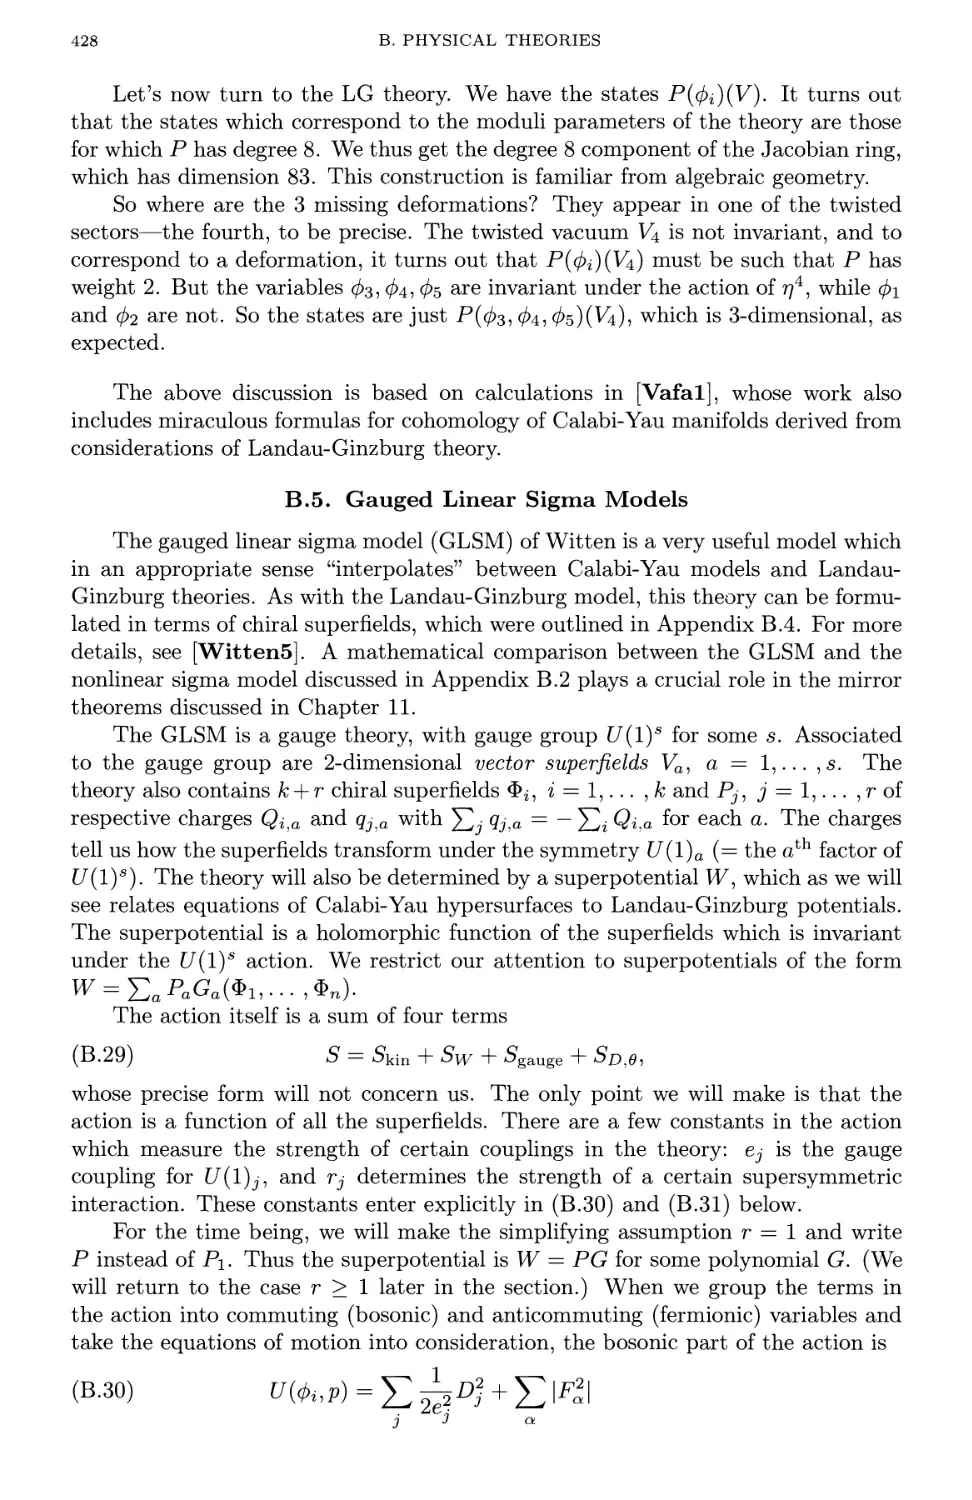 B.5. Gauged Linear Sigma Models